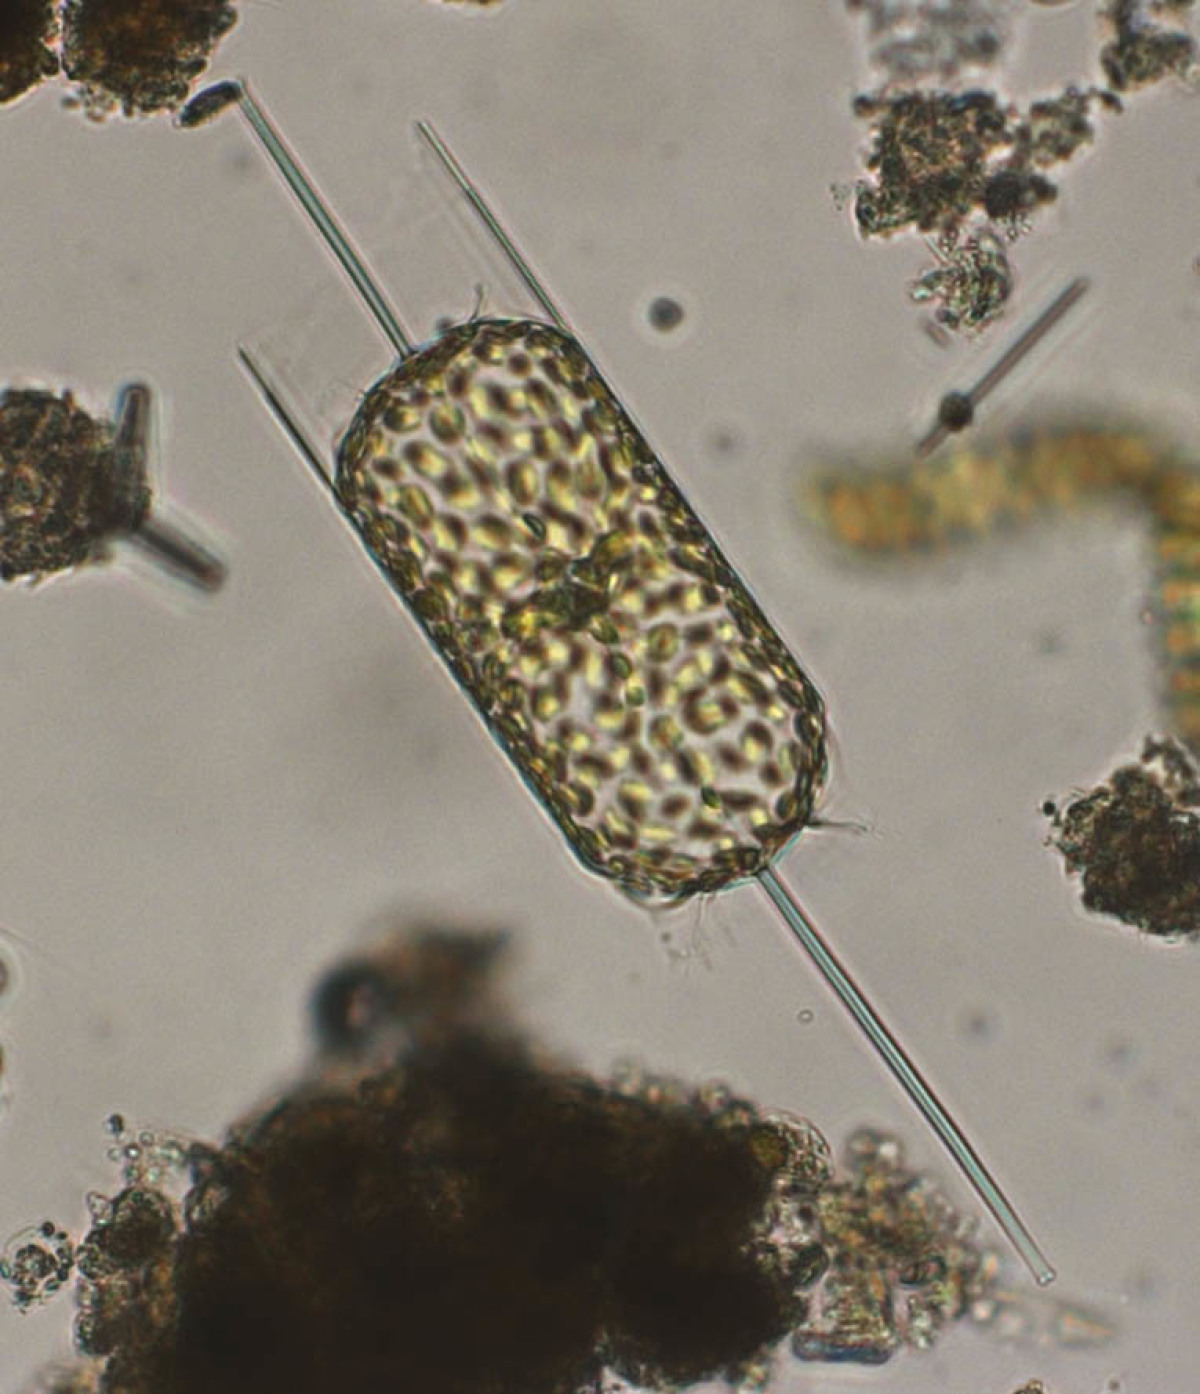 Living diatom cell